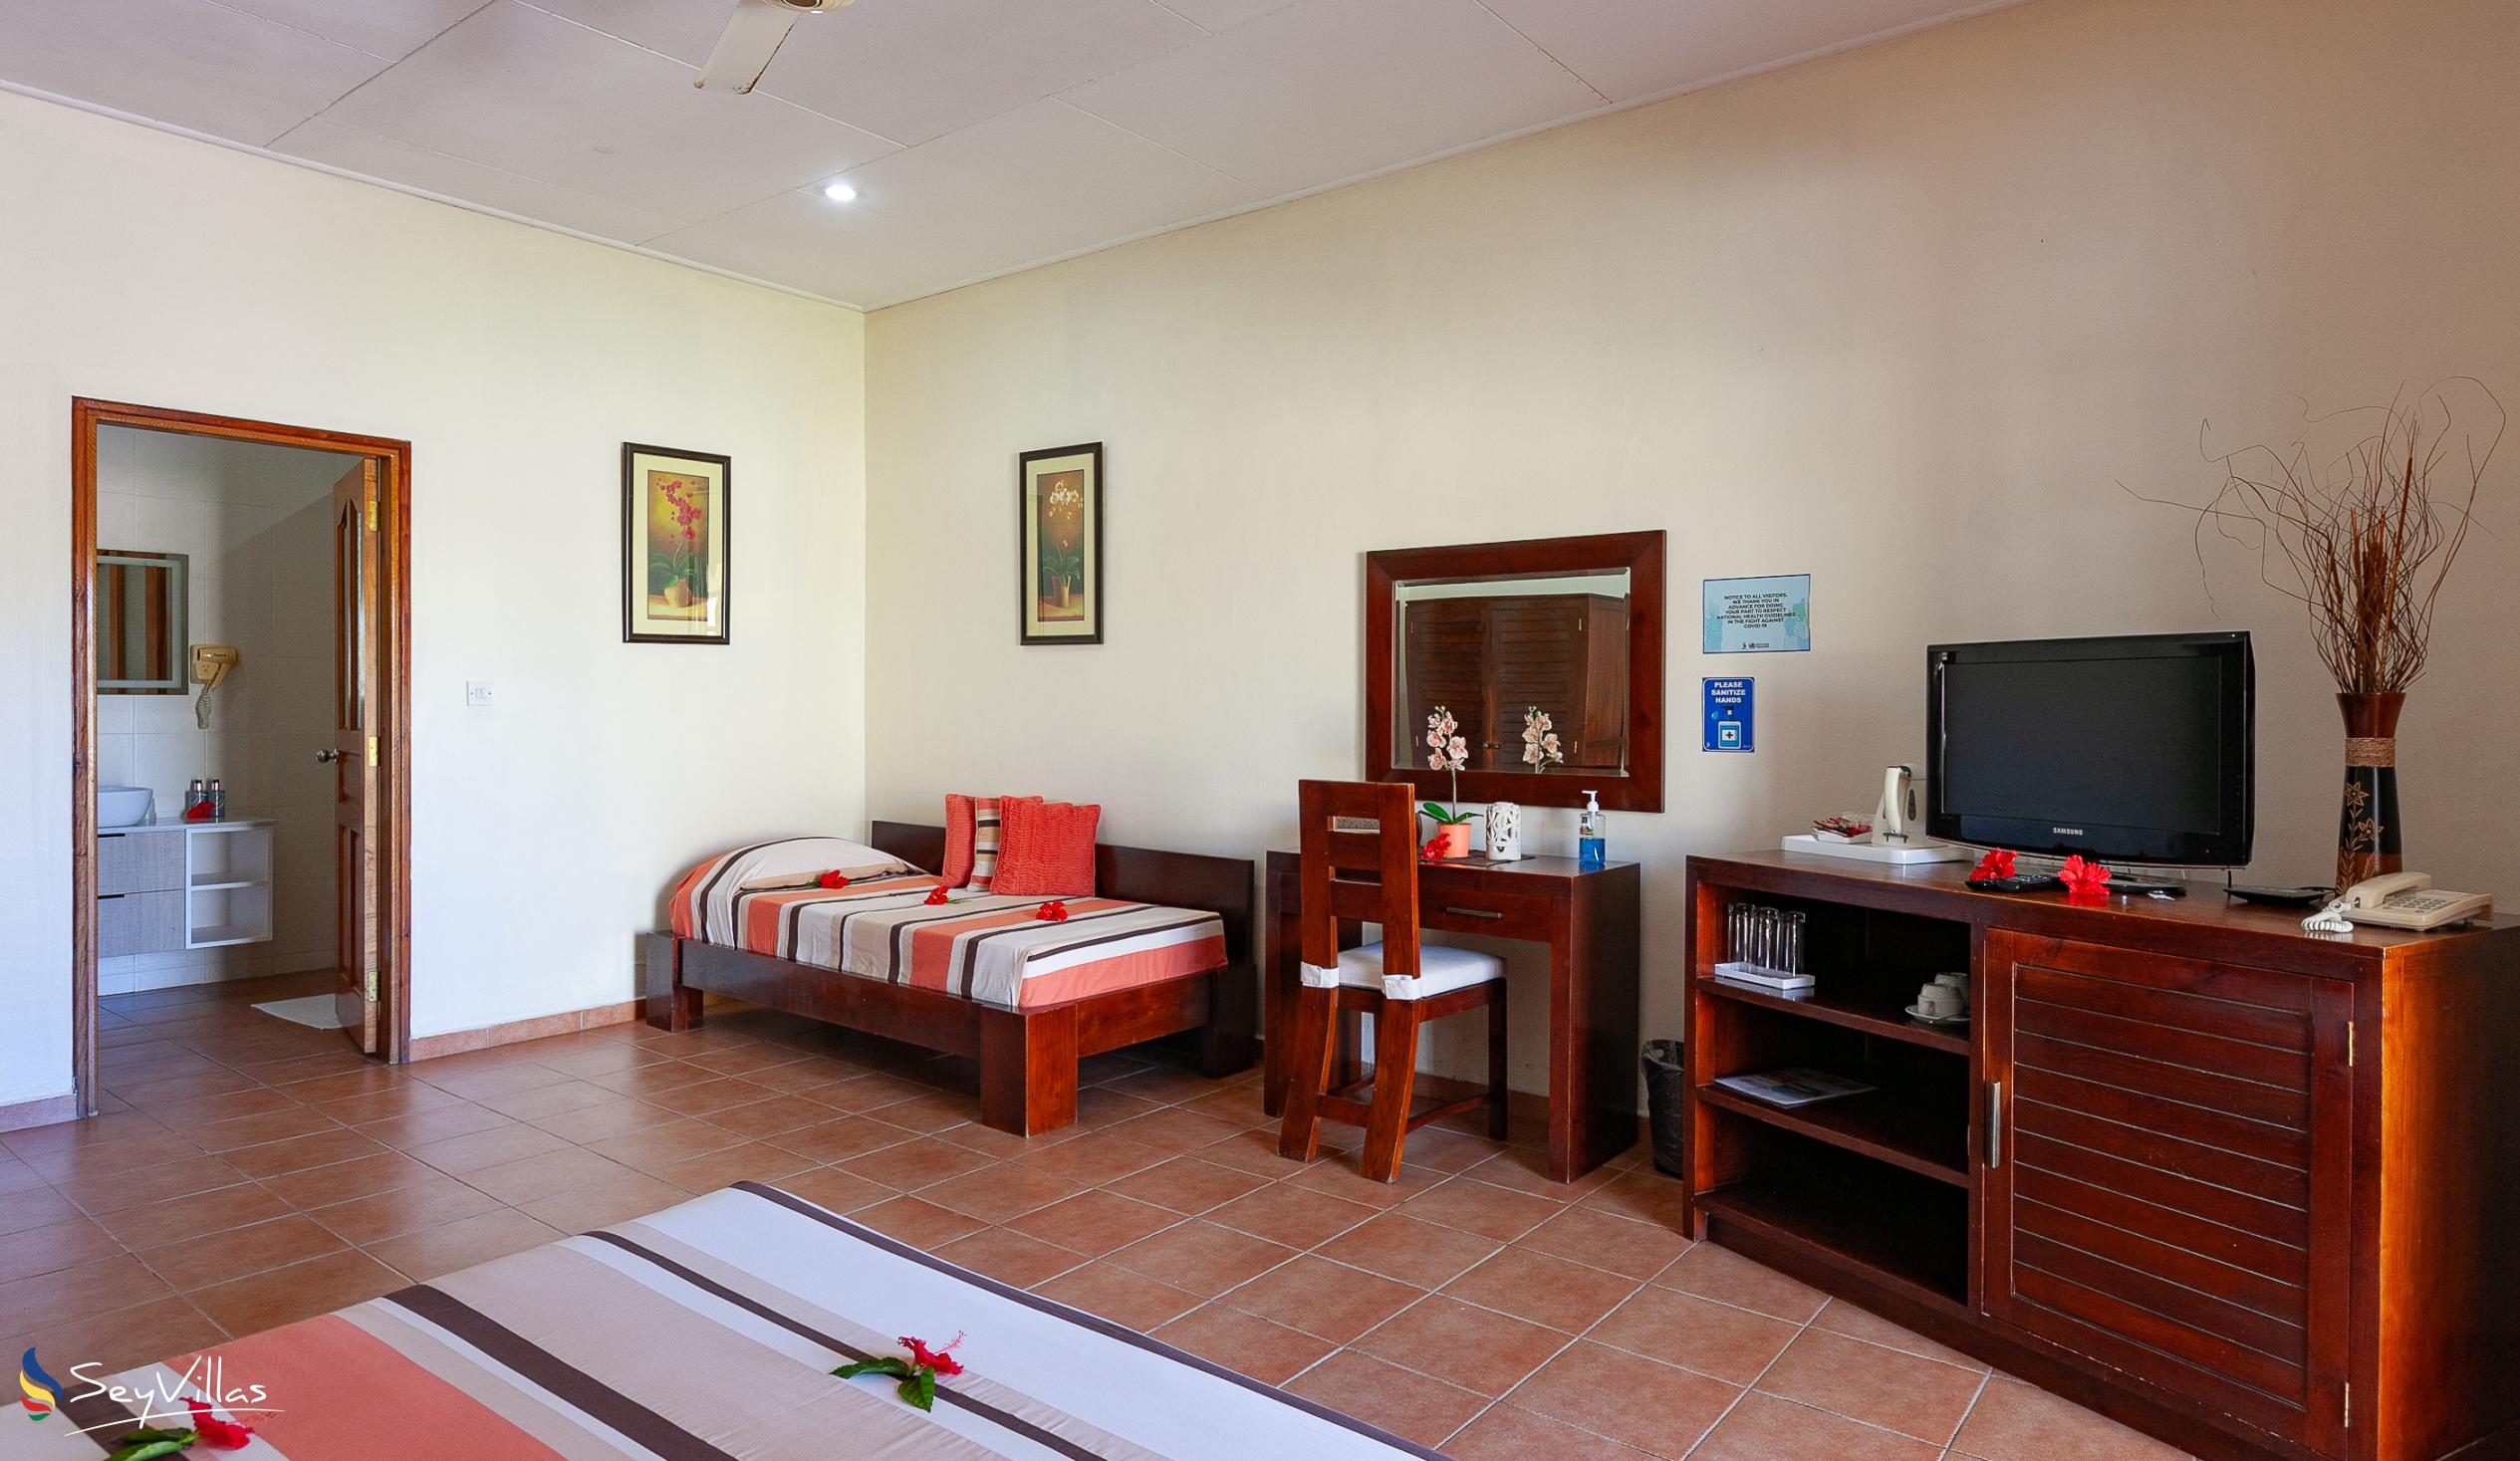 Photo 45: Britannia Hotel - Superior Family Room - Praslin (Seychelles)